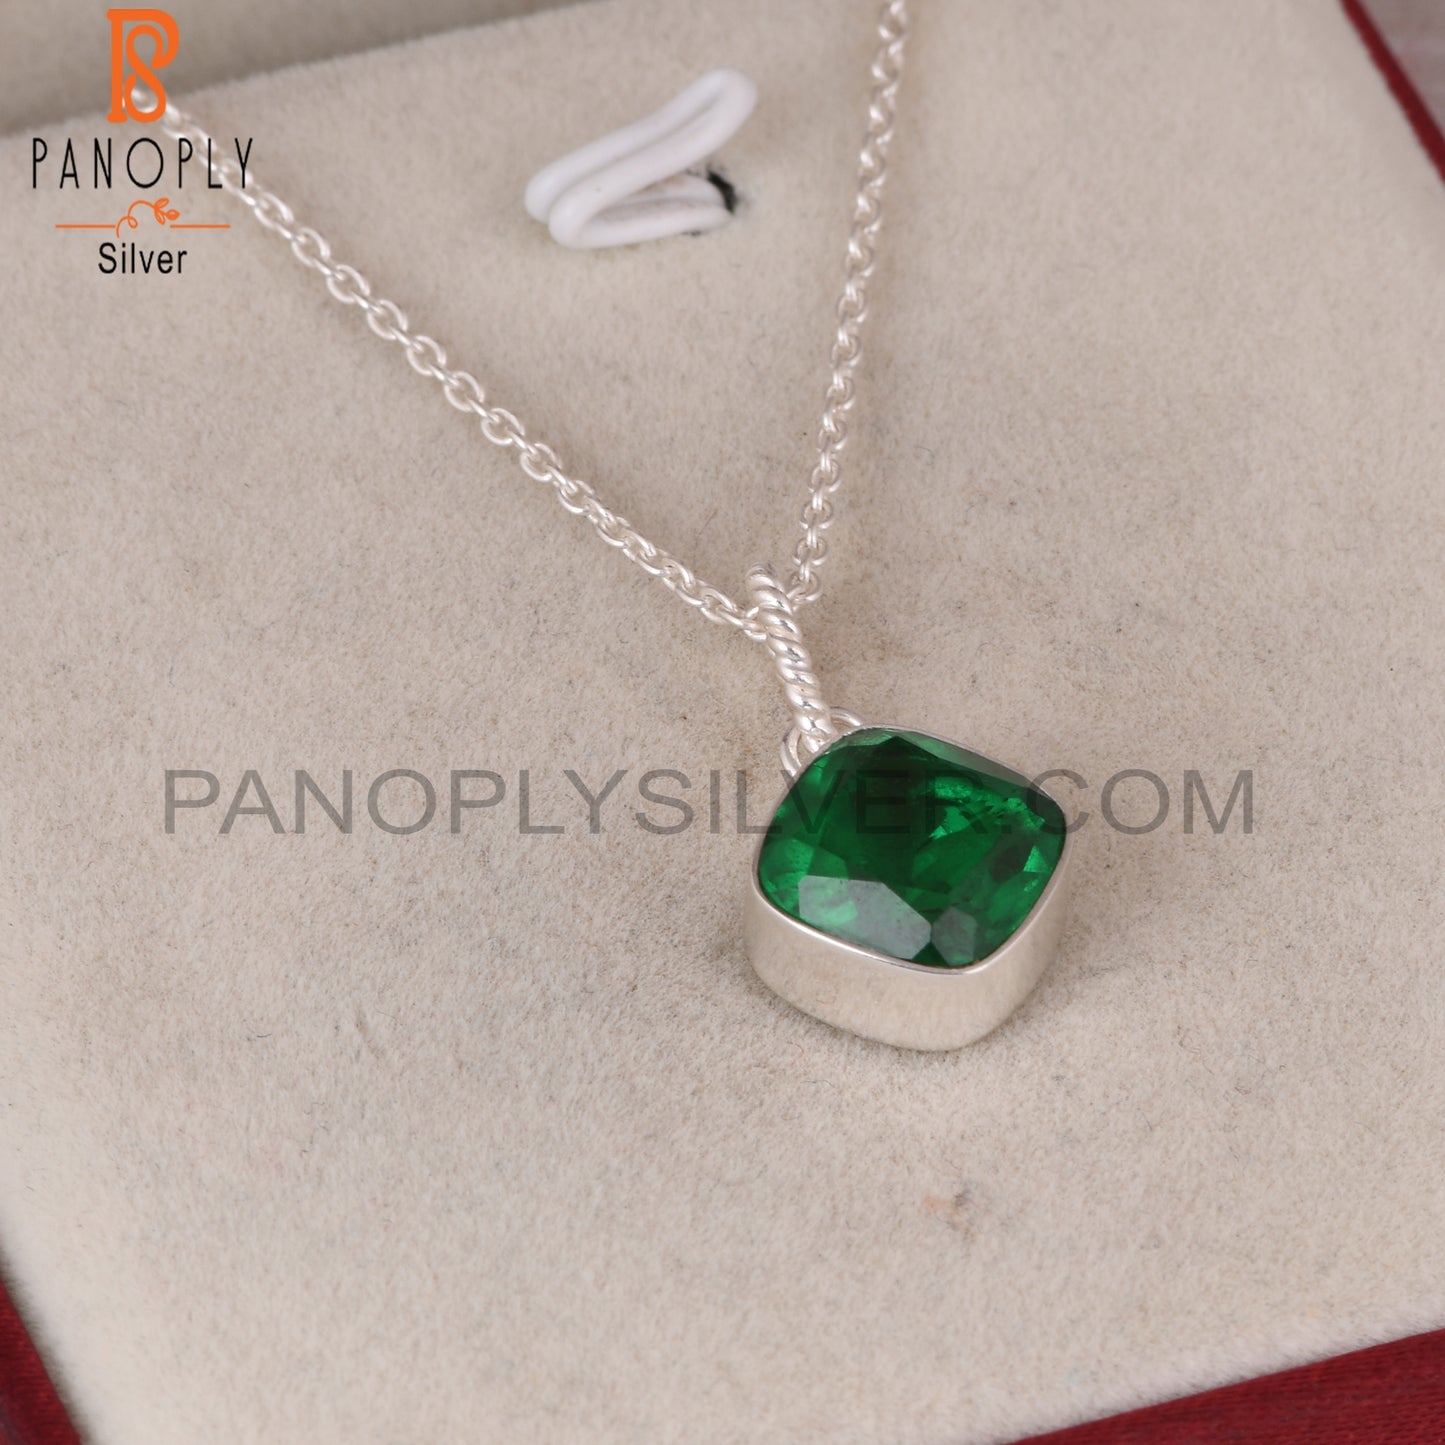 Doublet Zambian Emerald Quartz 925 Silver Pendant